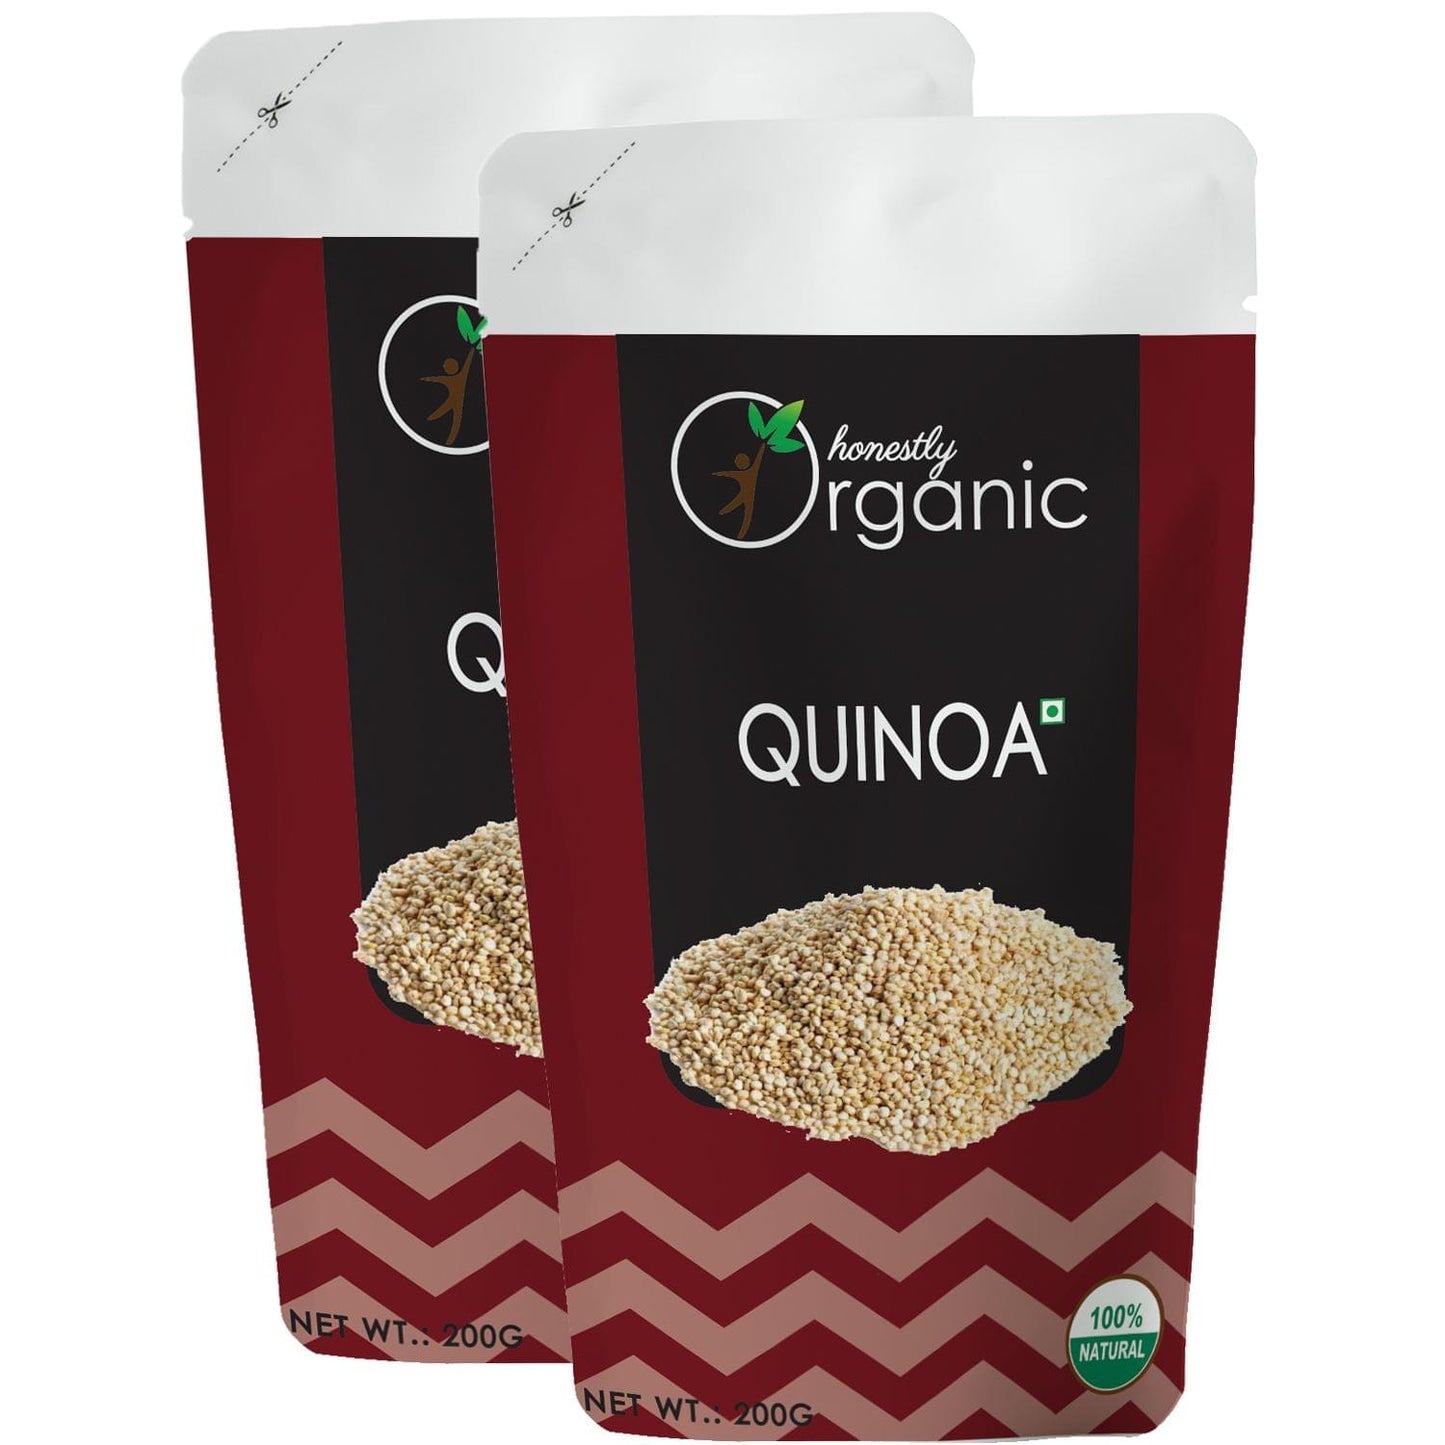 D-Alive Honestly Organic Quinoa - 200g (Pack of 2)